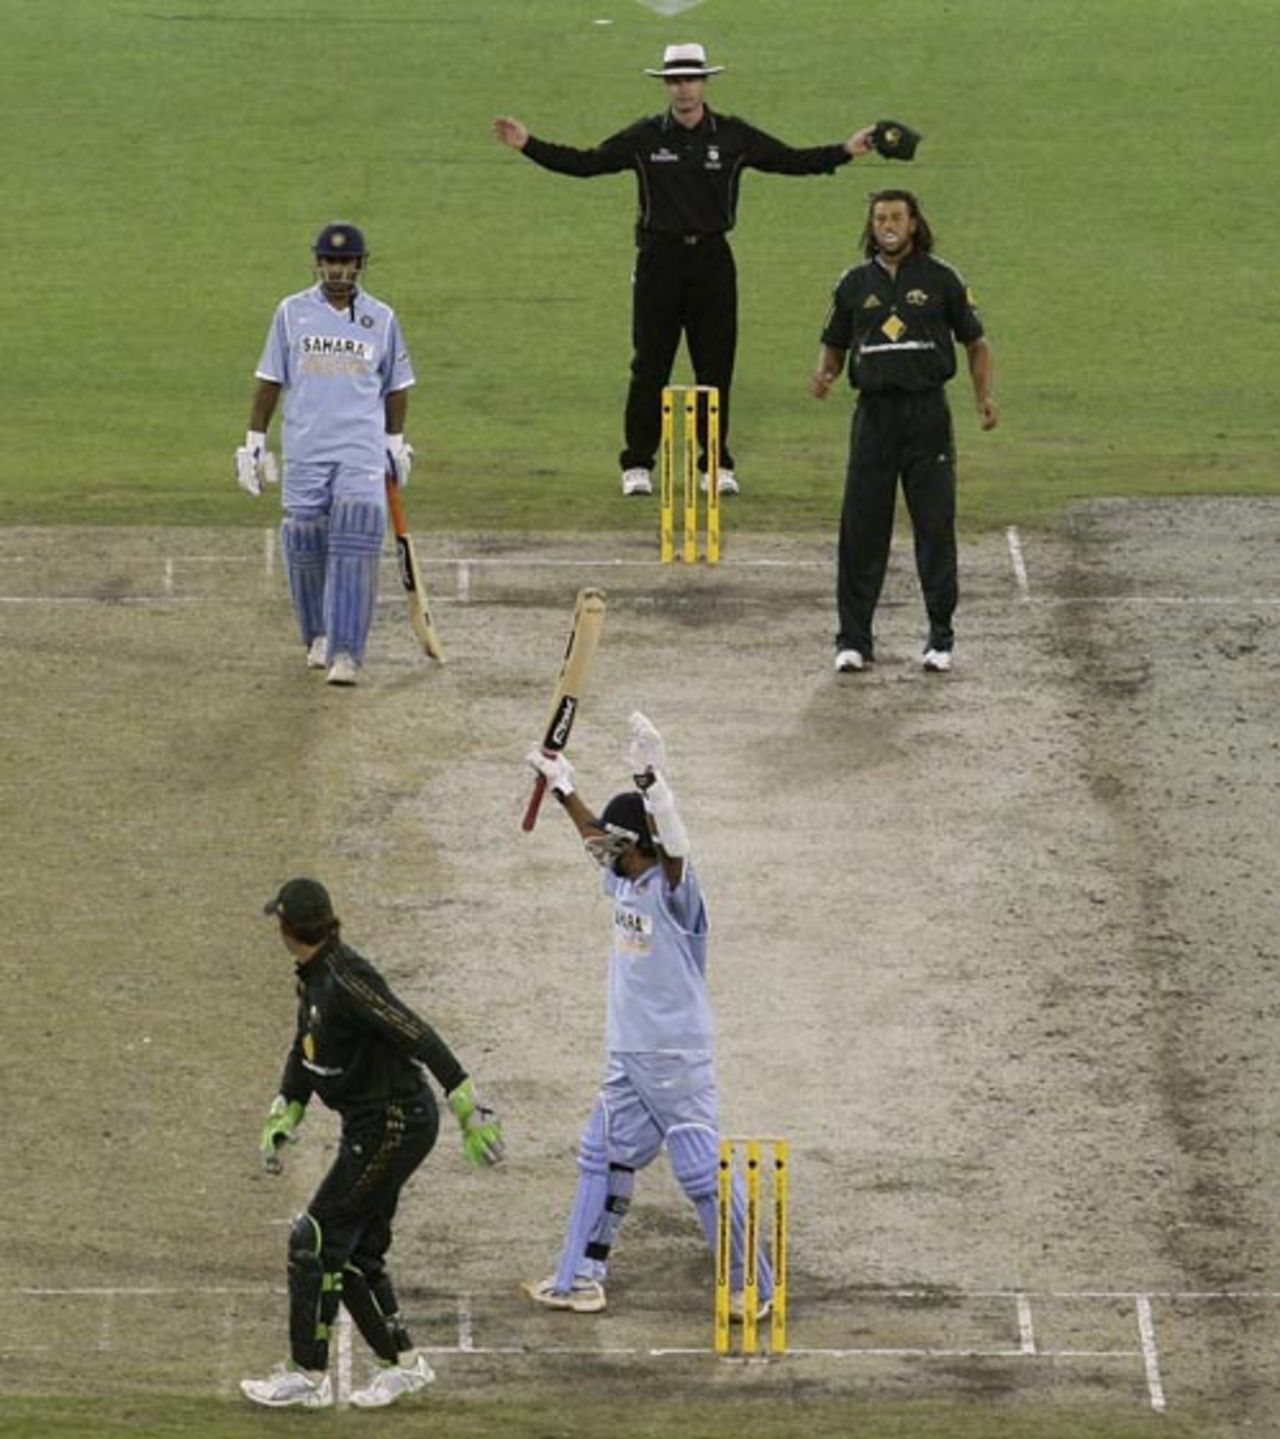 India's winning run came via a wide from Andrew Symonds, Australia v India, CB Series, 4th ODI, Melbourne, February 10, 2008